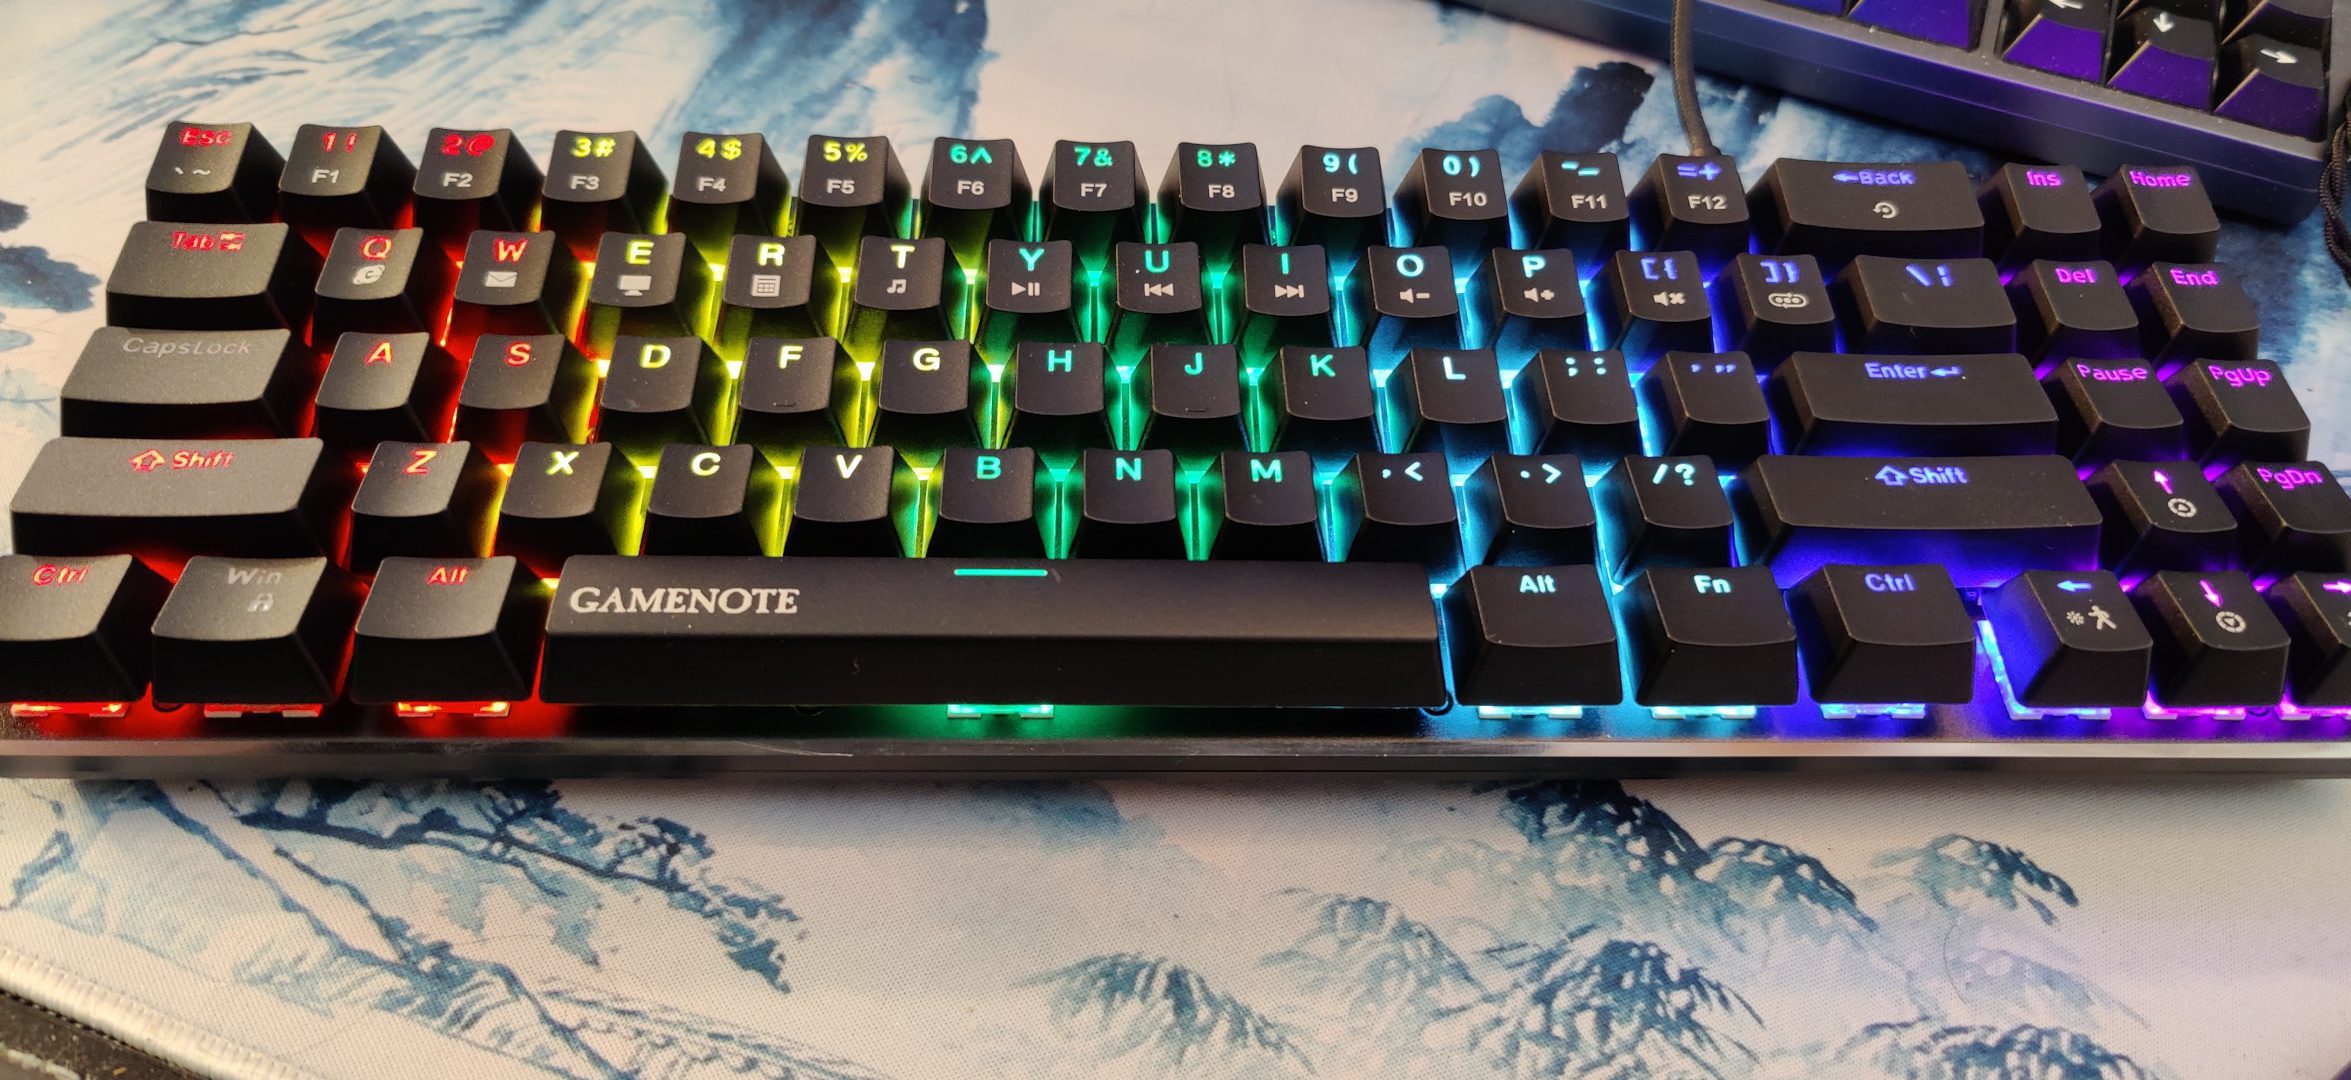 Havit KB512L "Gamenote" keyboard displaying rainbow LED lighting.